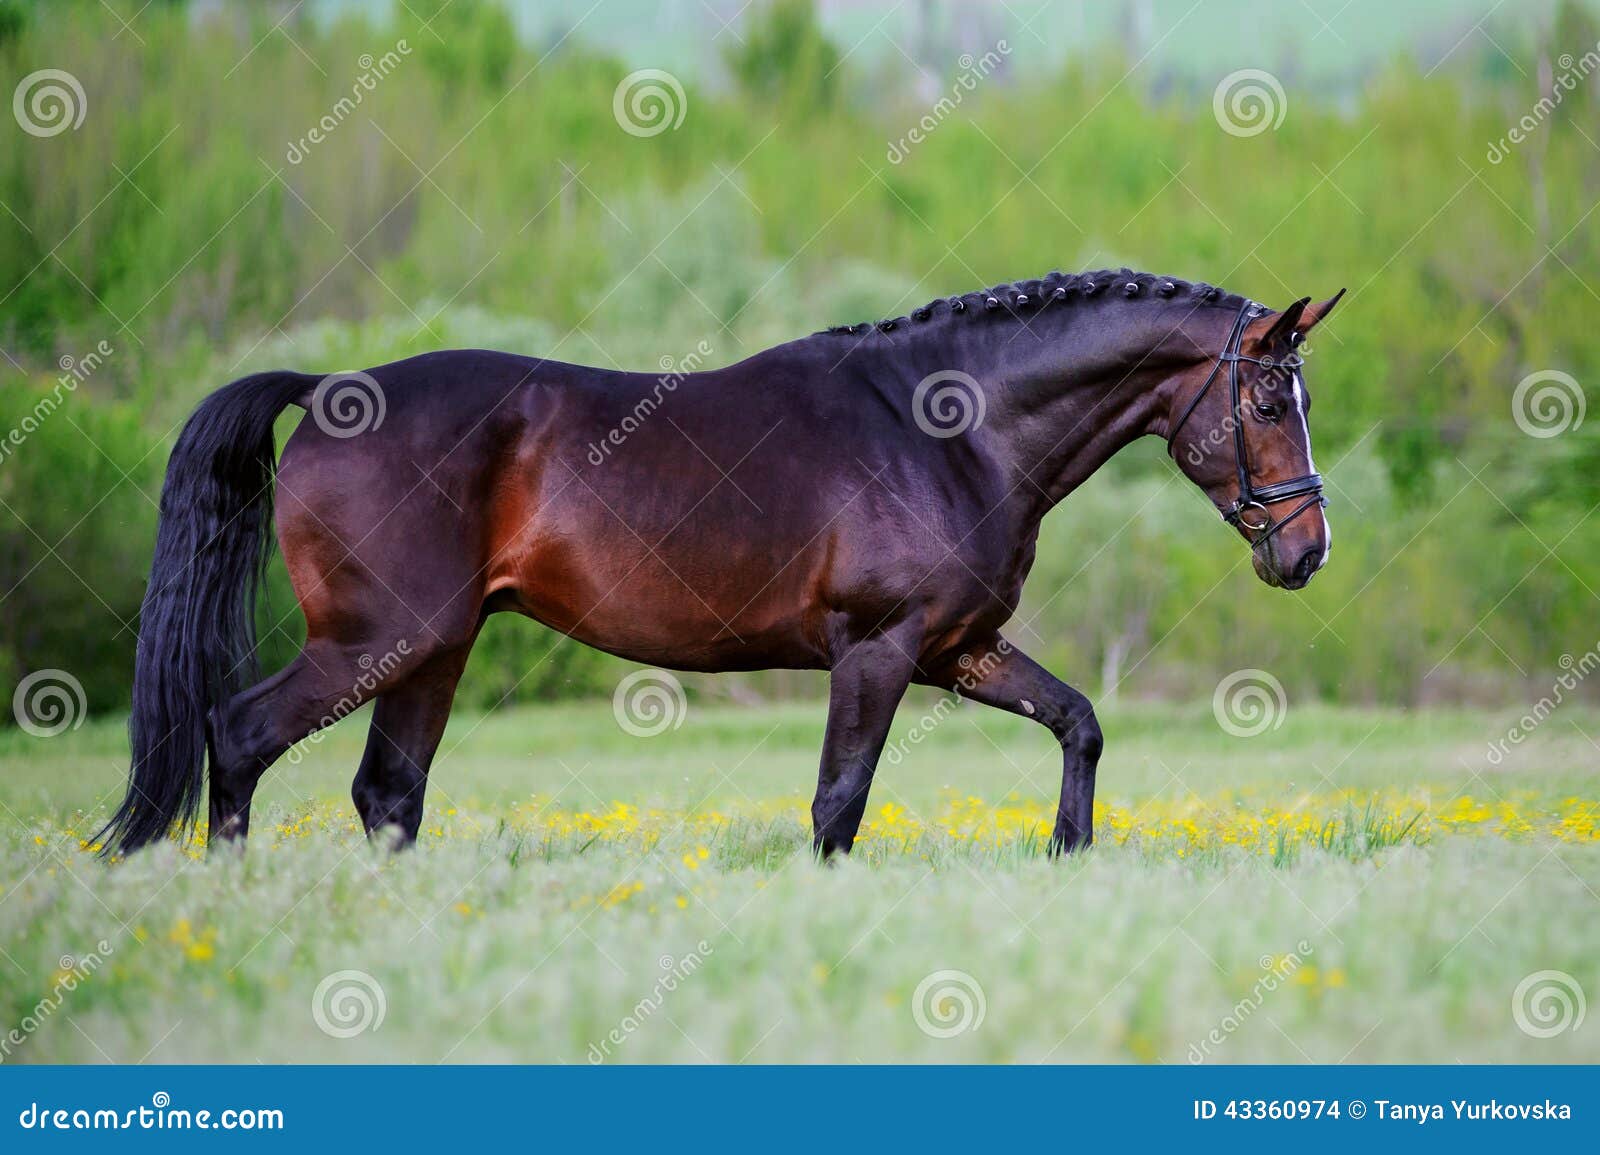 beautiful elegant stallion sporting breed bridle with braided mane